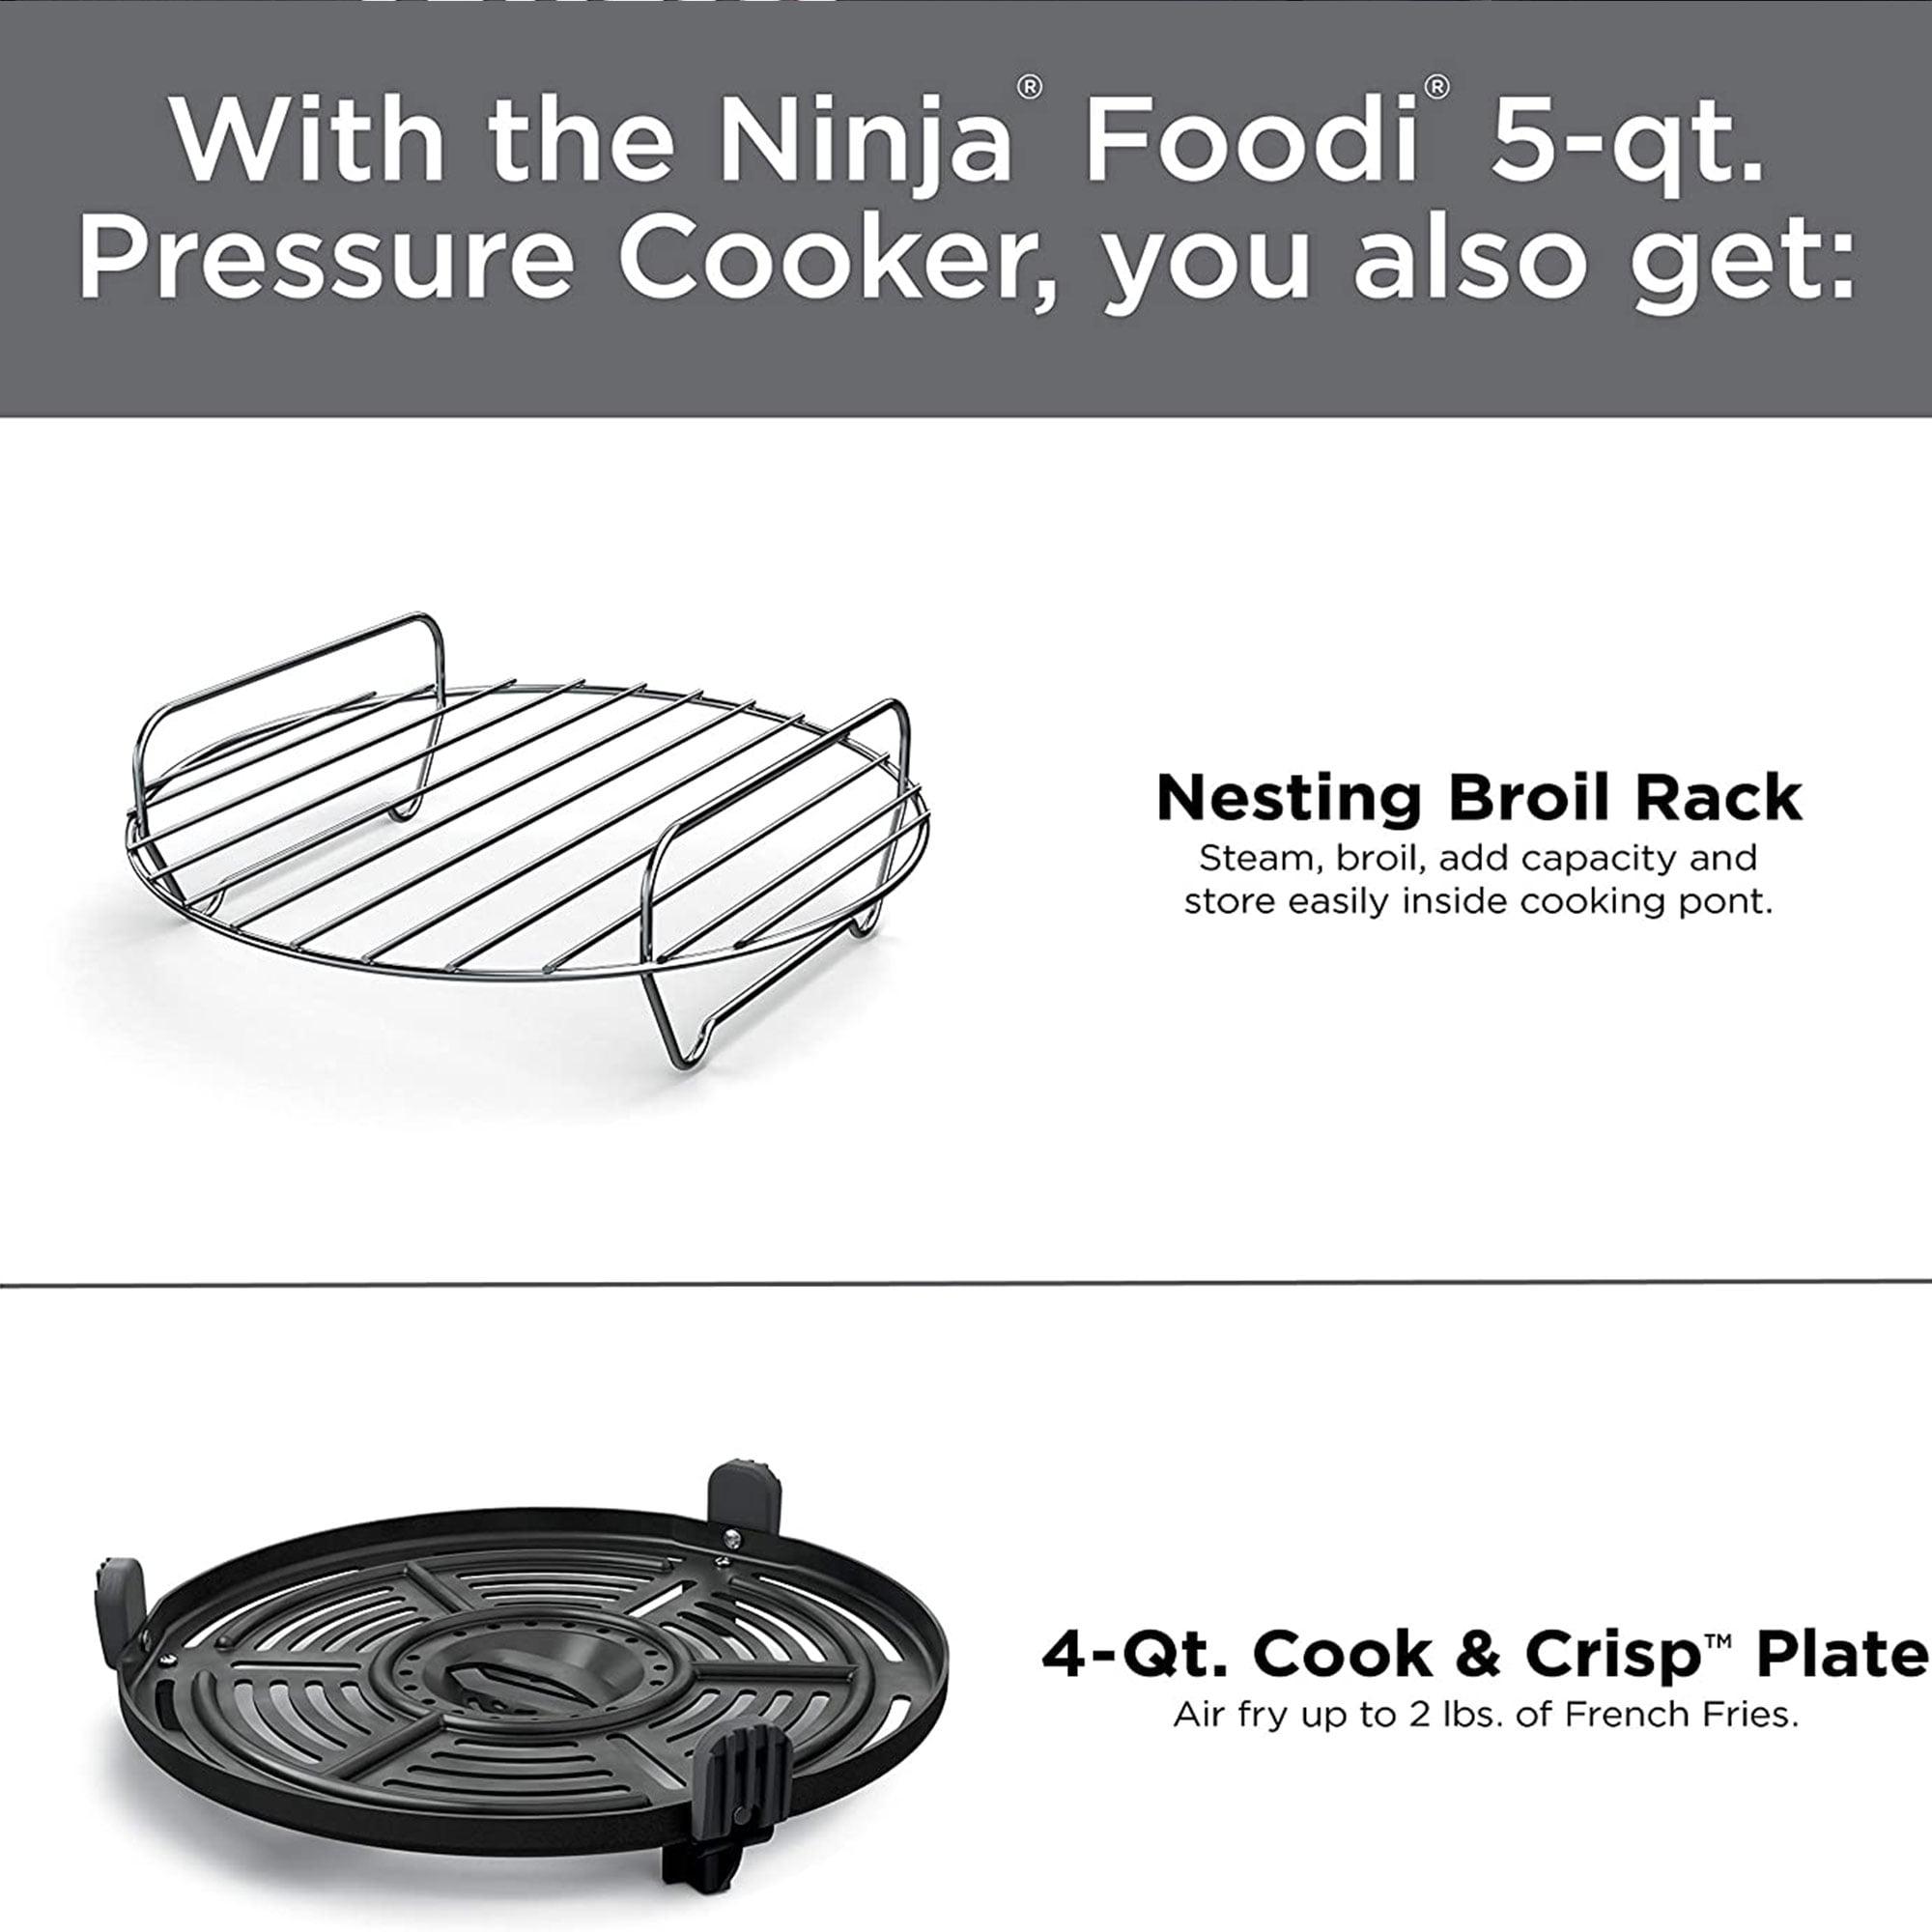 NINJA Foodi 9-in-1 6.5 Qt. Electric Pressure Cooker & Air Fryer (OP301)  OP301 - The Home Depot